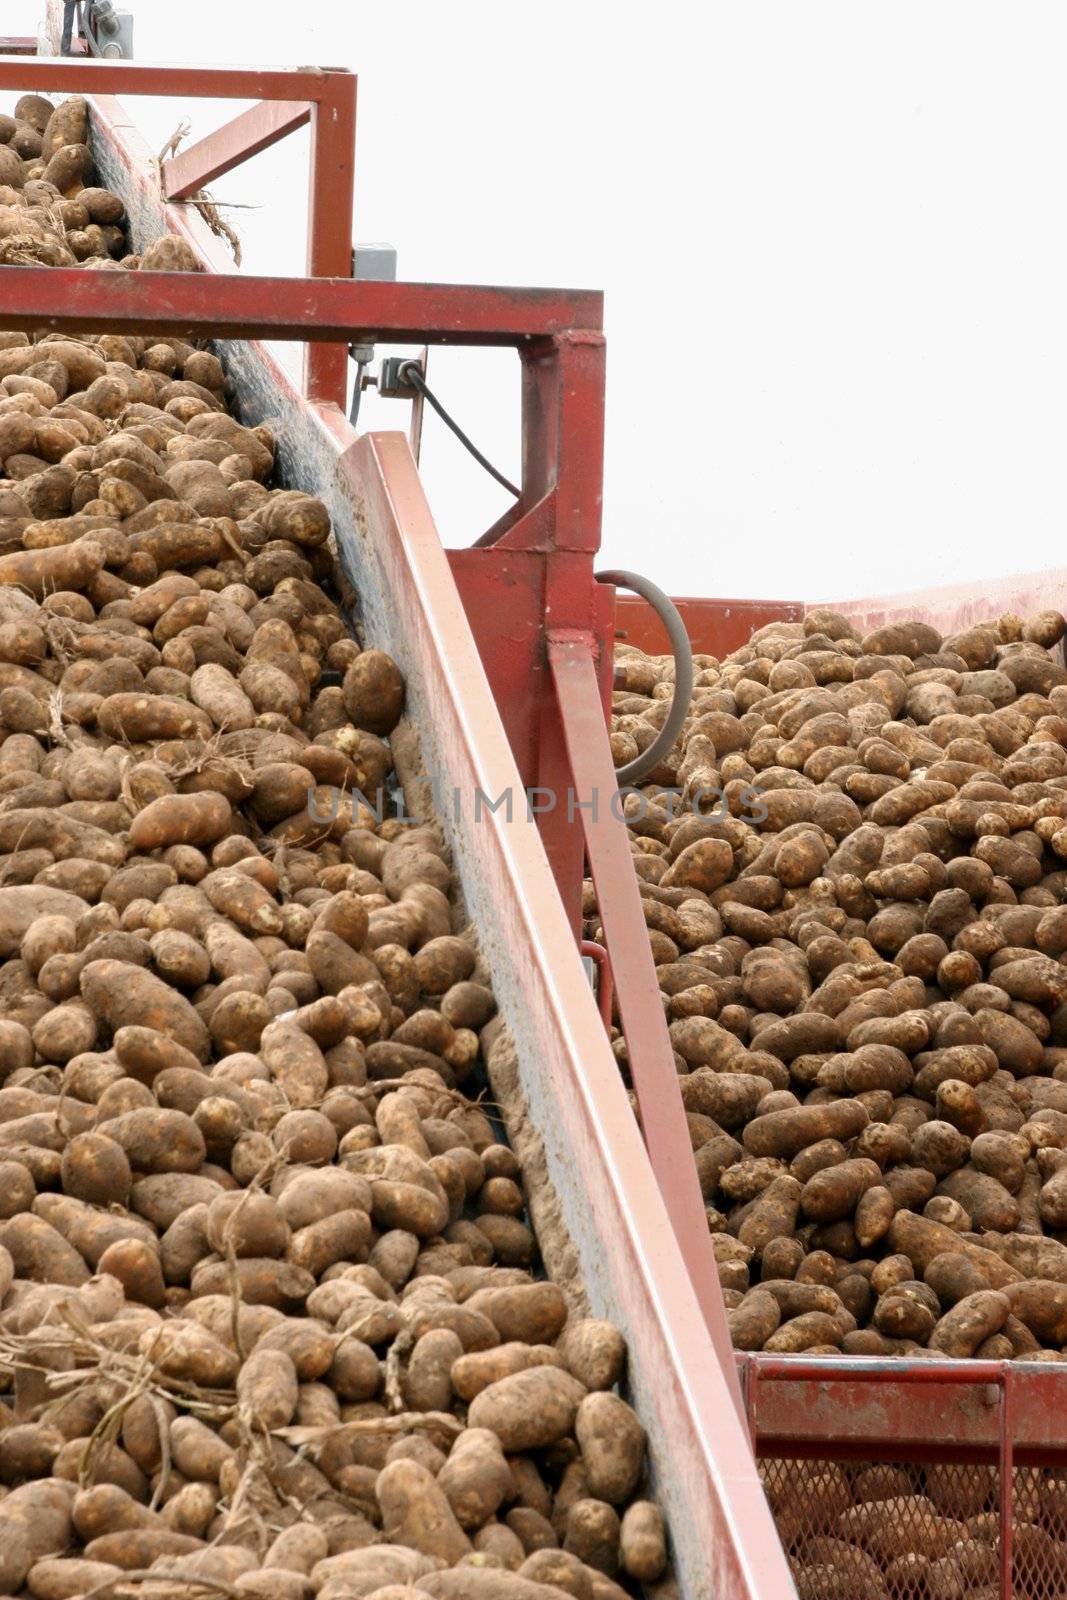 Conveyor belt full of harvested potatoes